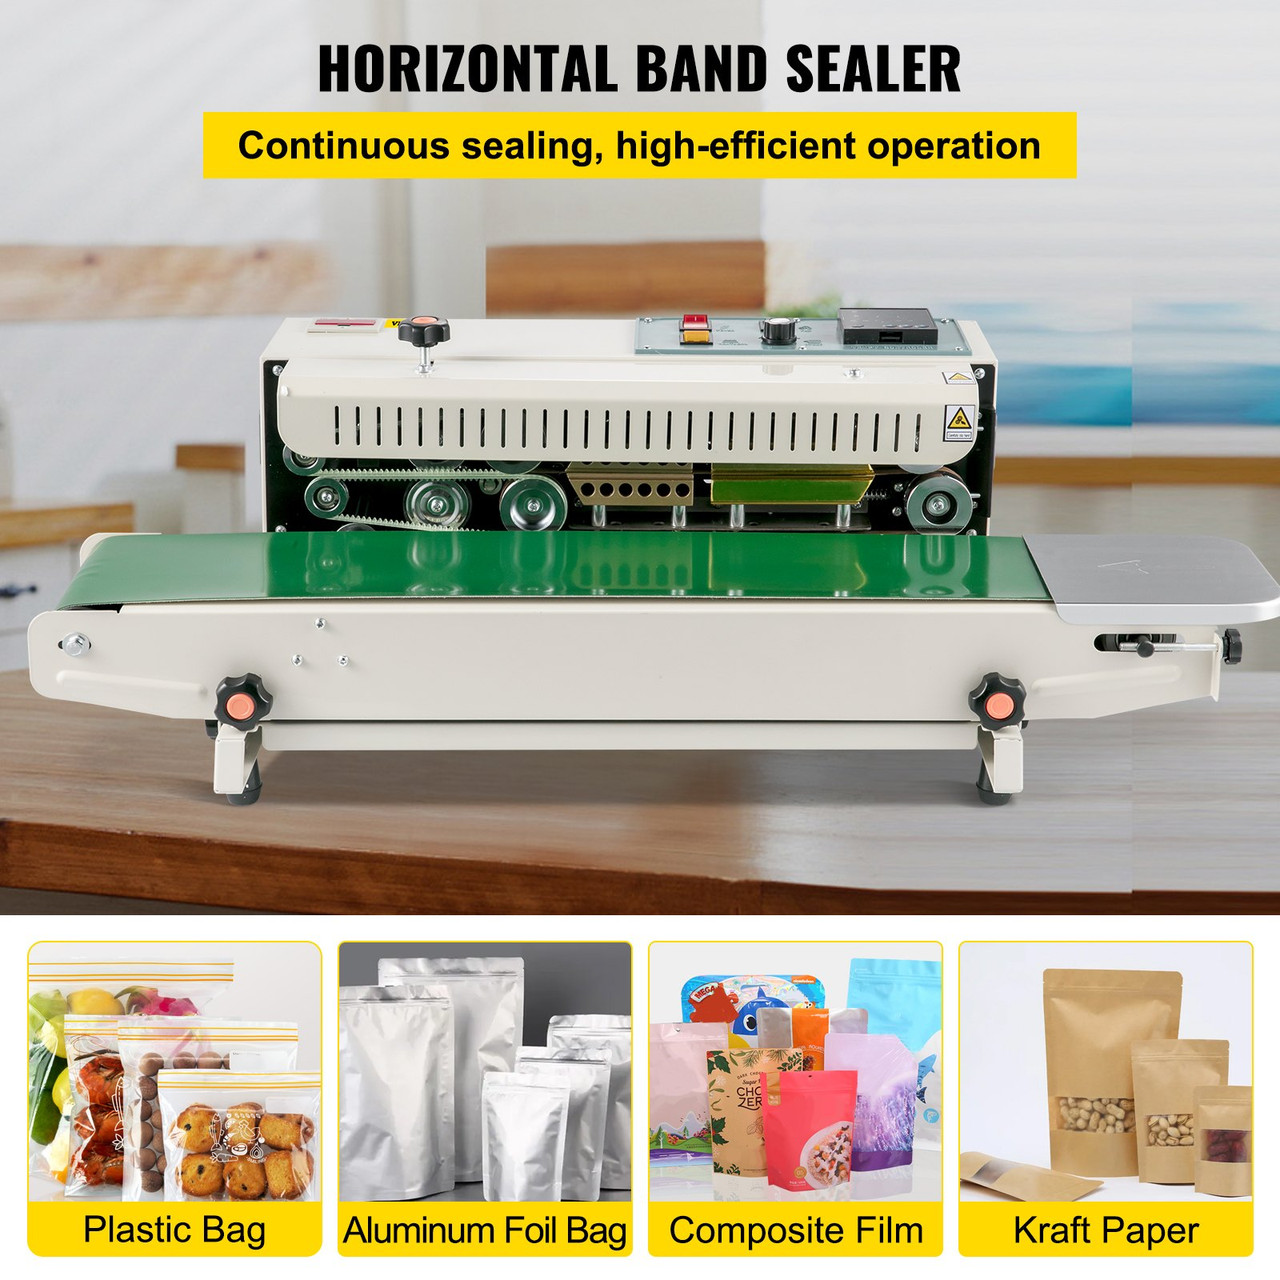 Continuous Bag Band Sealing Machine FR900K Band Sealer Machine with Digital Temperature Control Horizontal Bag Sealer for 0.02-0.08 mm Plastic Bags Continuous Band Sealer w/Printing Function